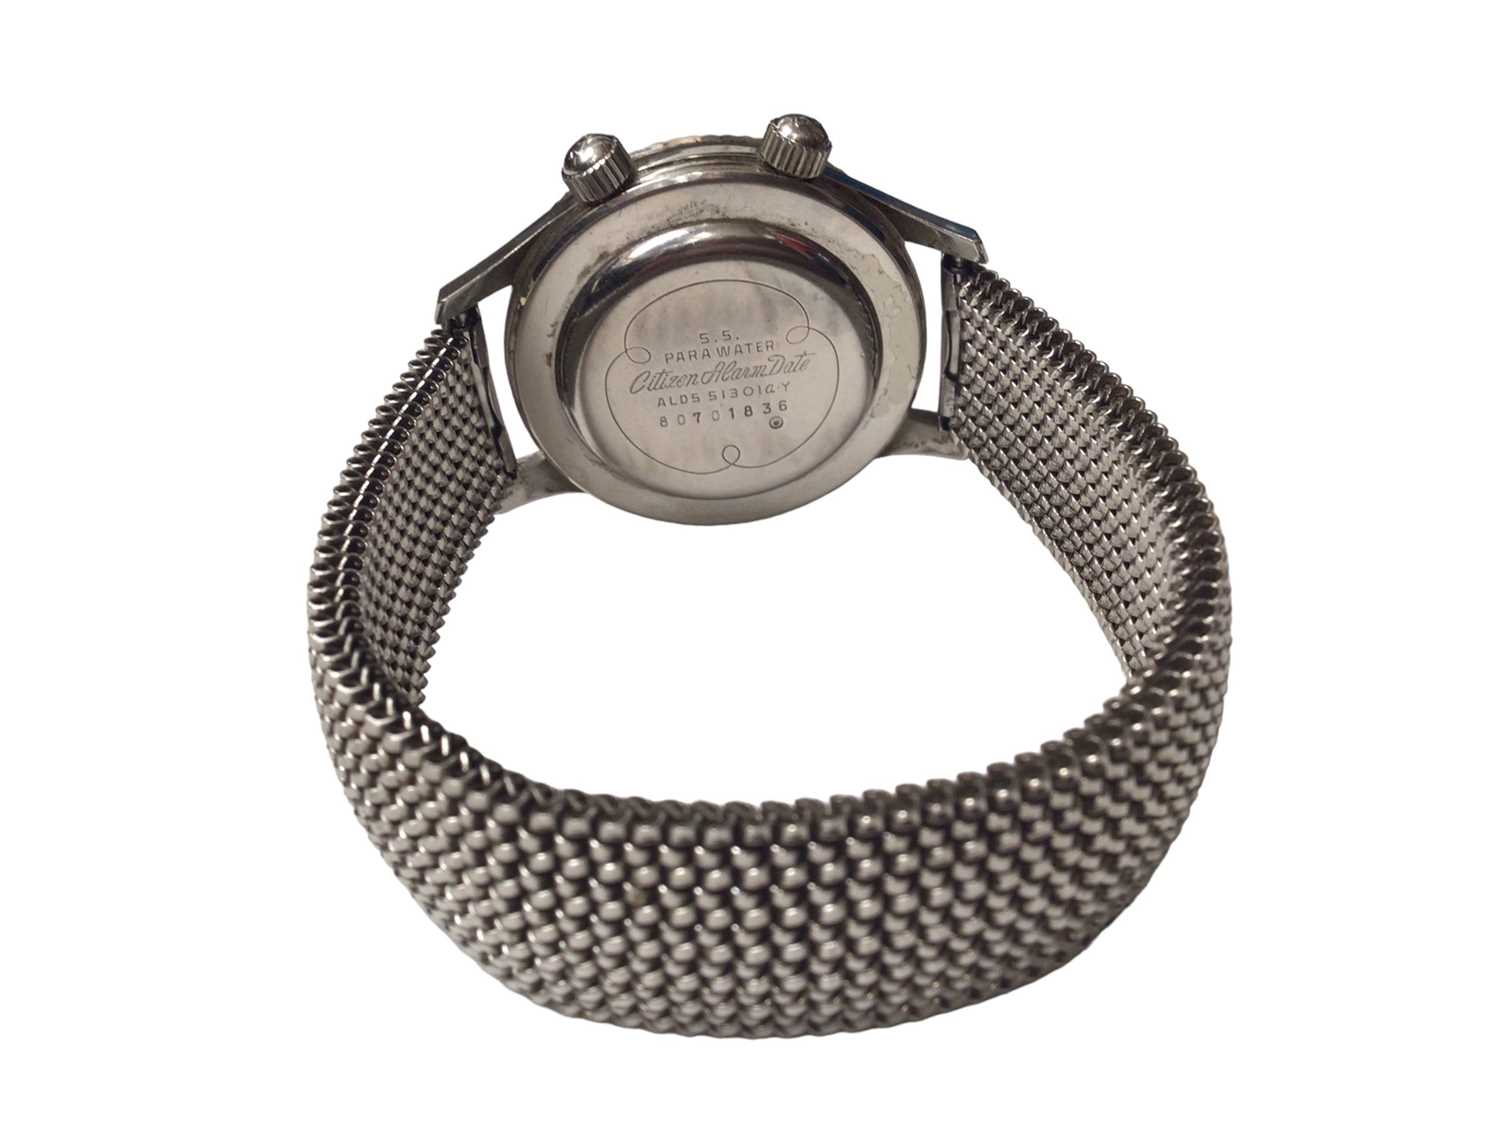 Gentlemen's Citizen Alarm Date stainless steel wristwatch - Image 4 of 4